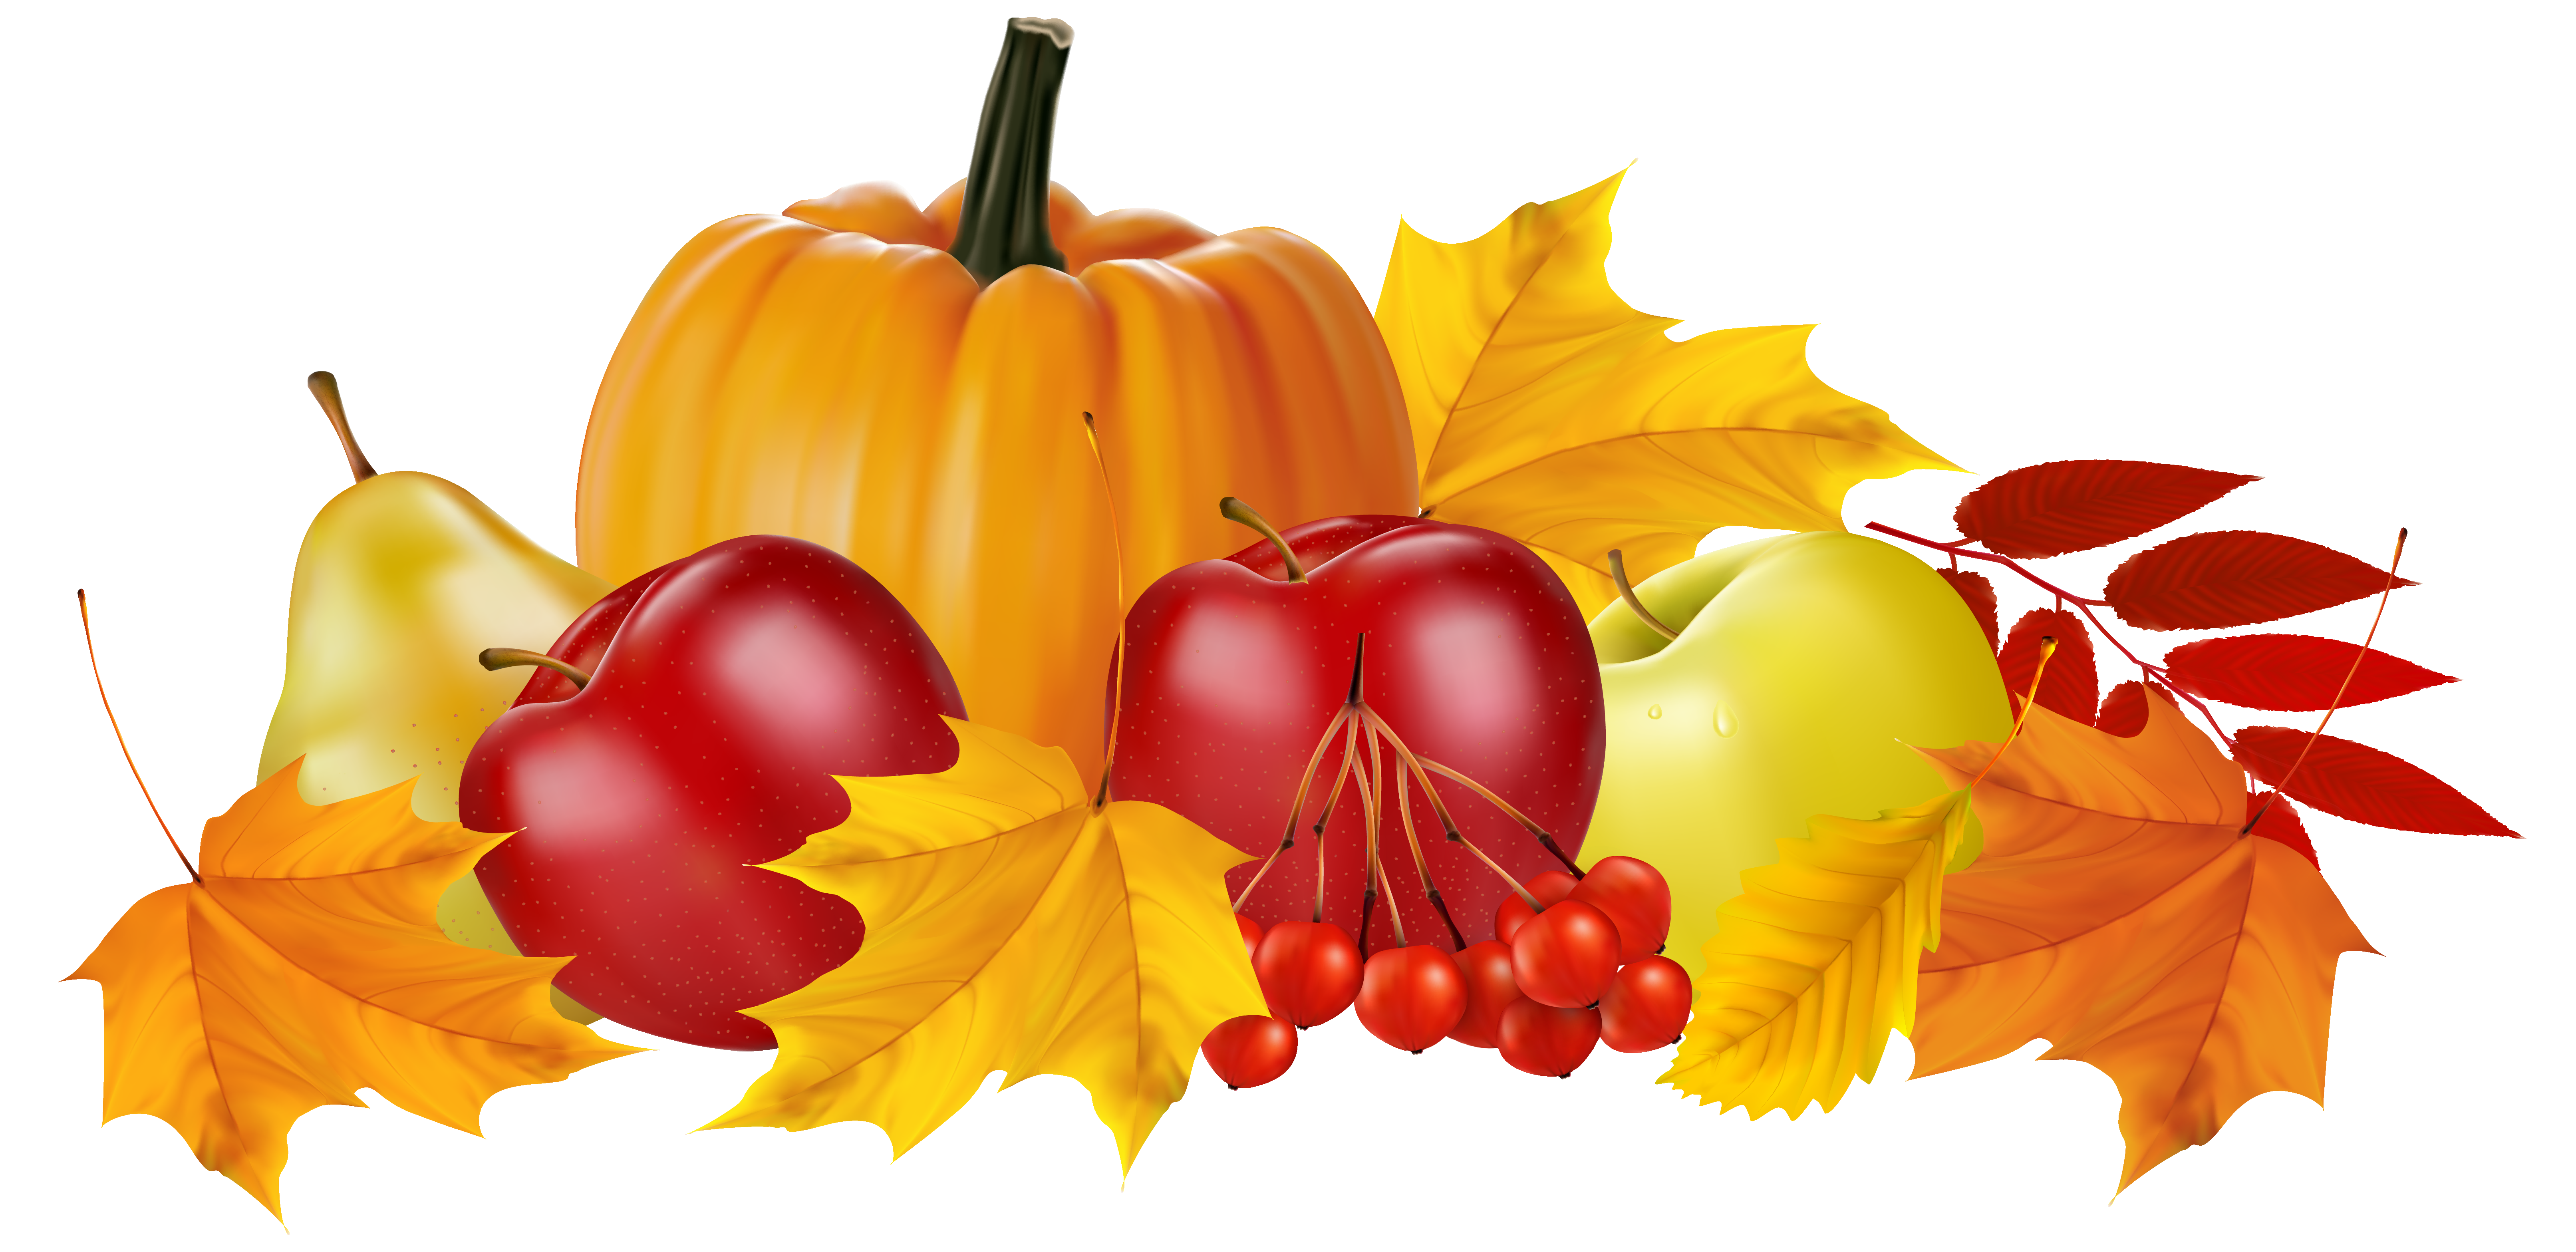 Pumpkin and fruits png. Hedgehog clipart autumn